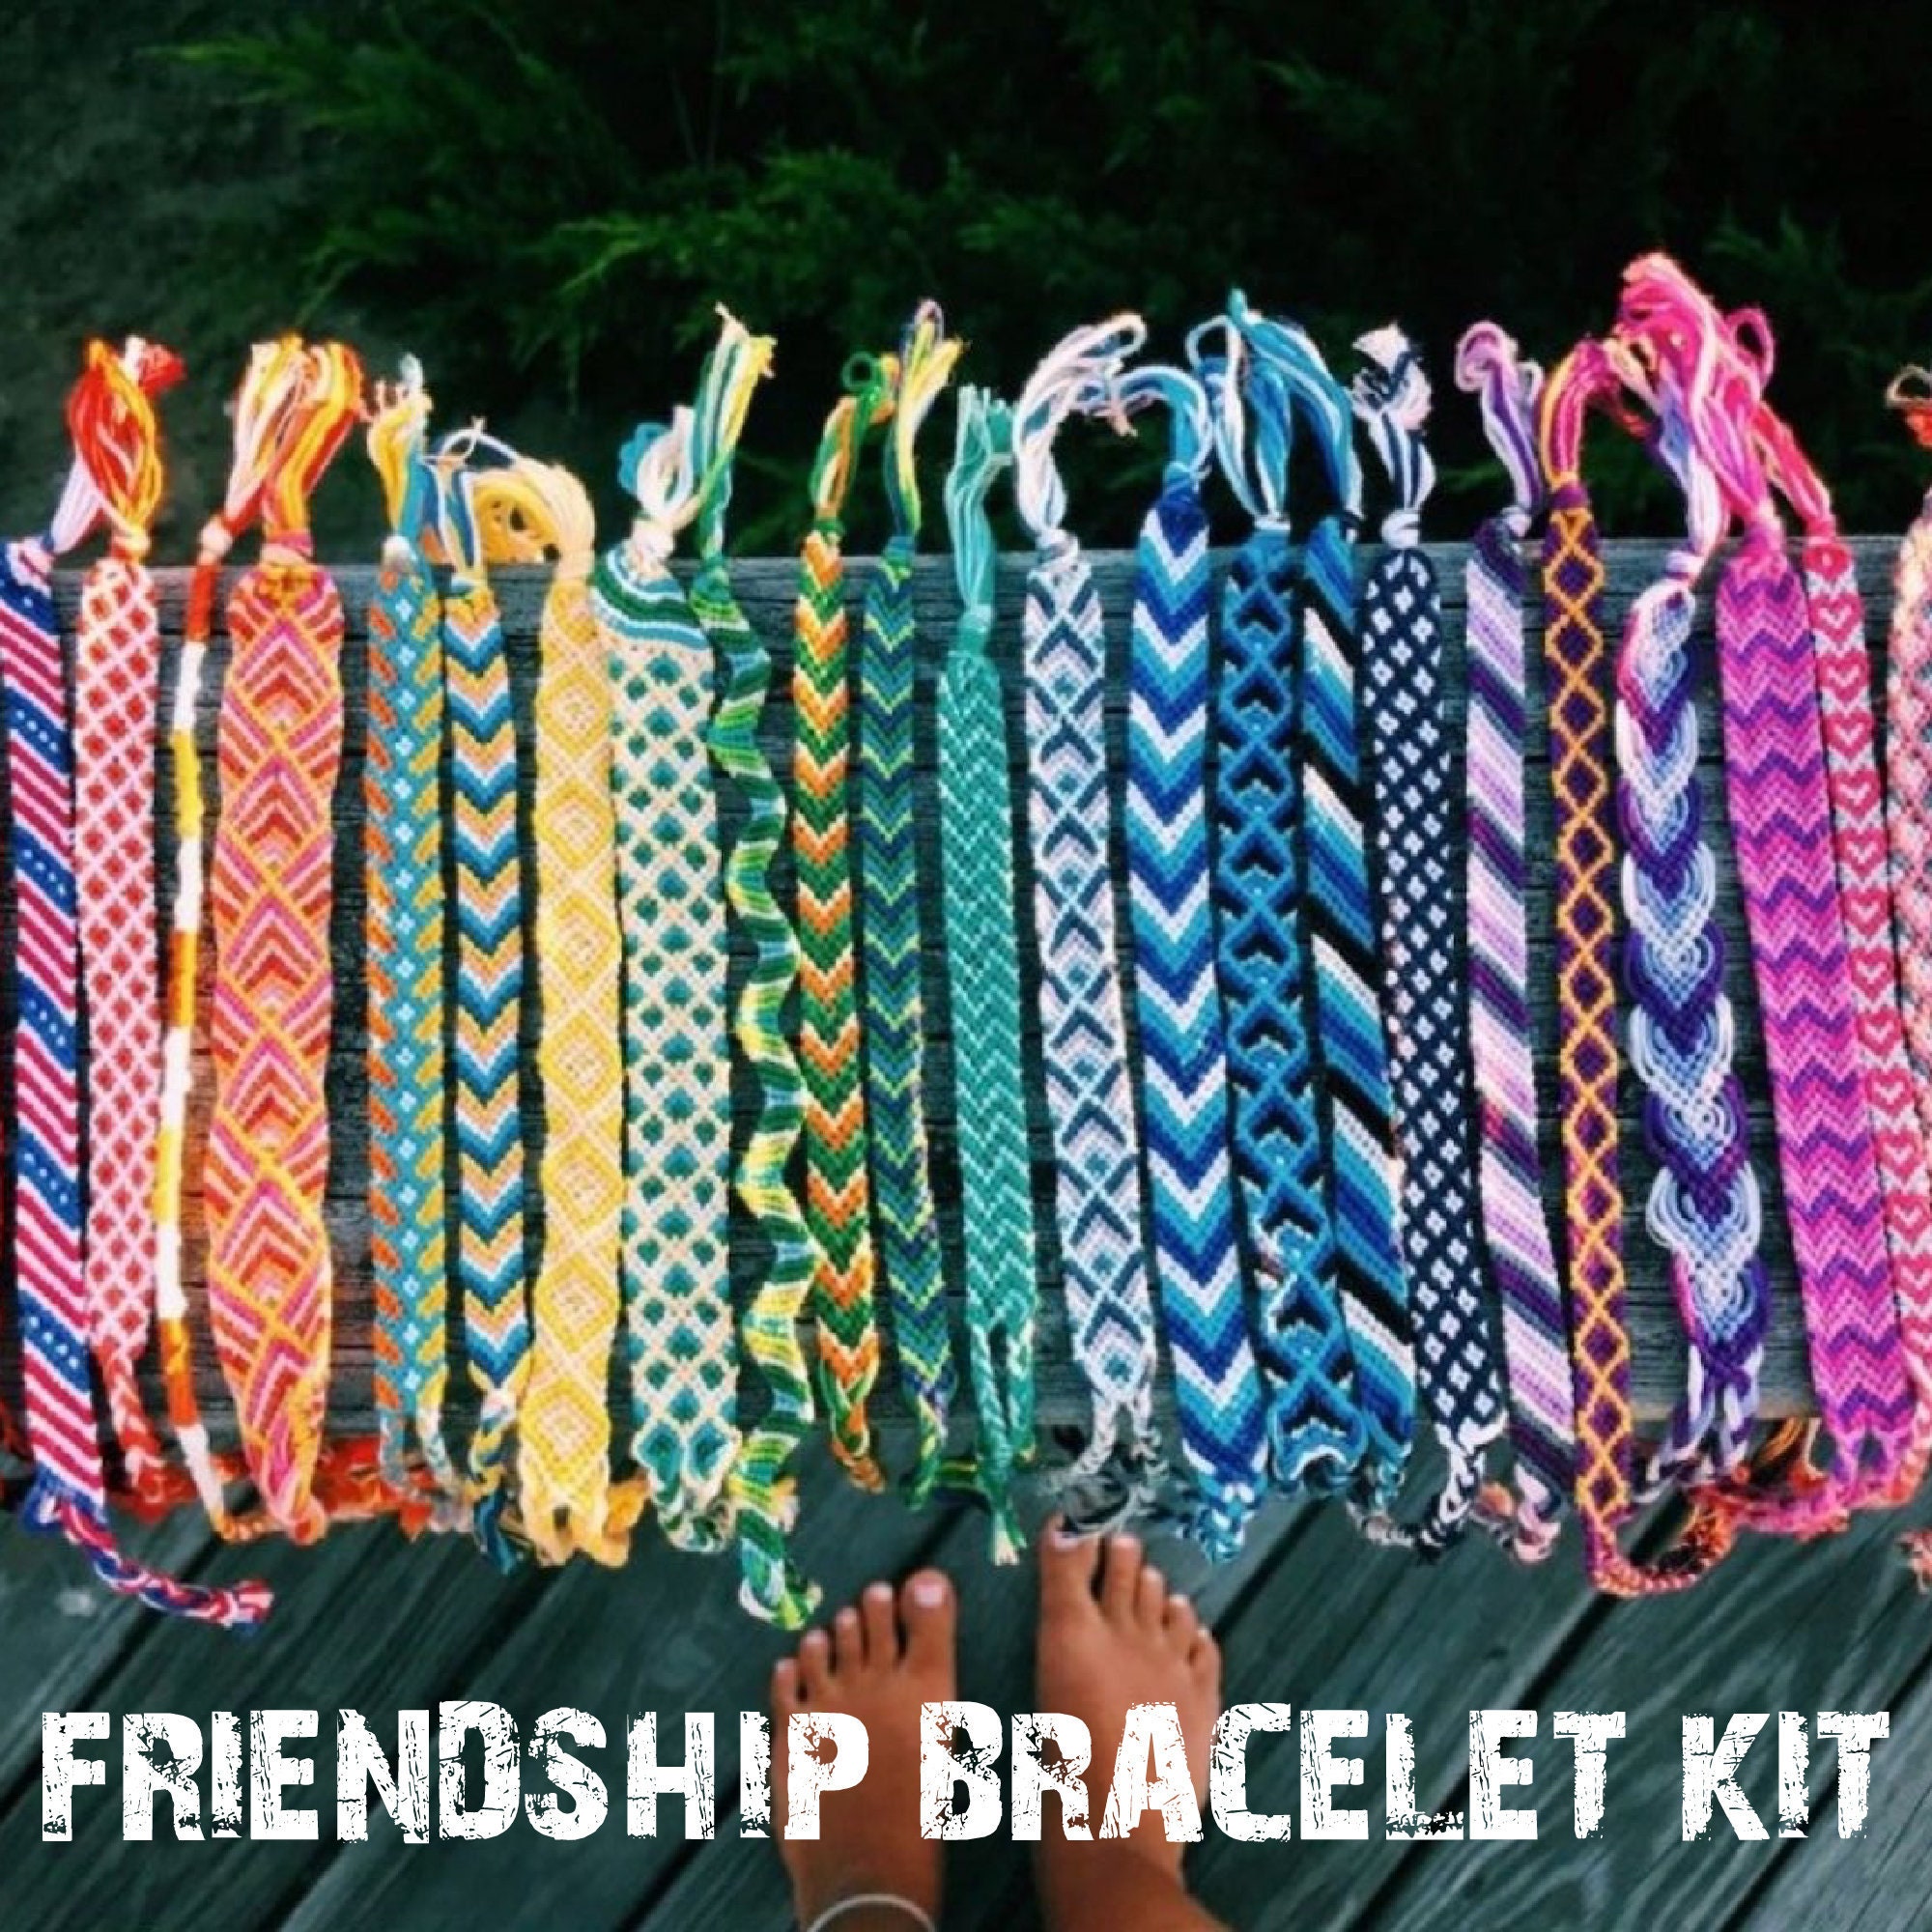 Top 10 friendship bracelet kit ideas and inspiration